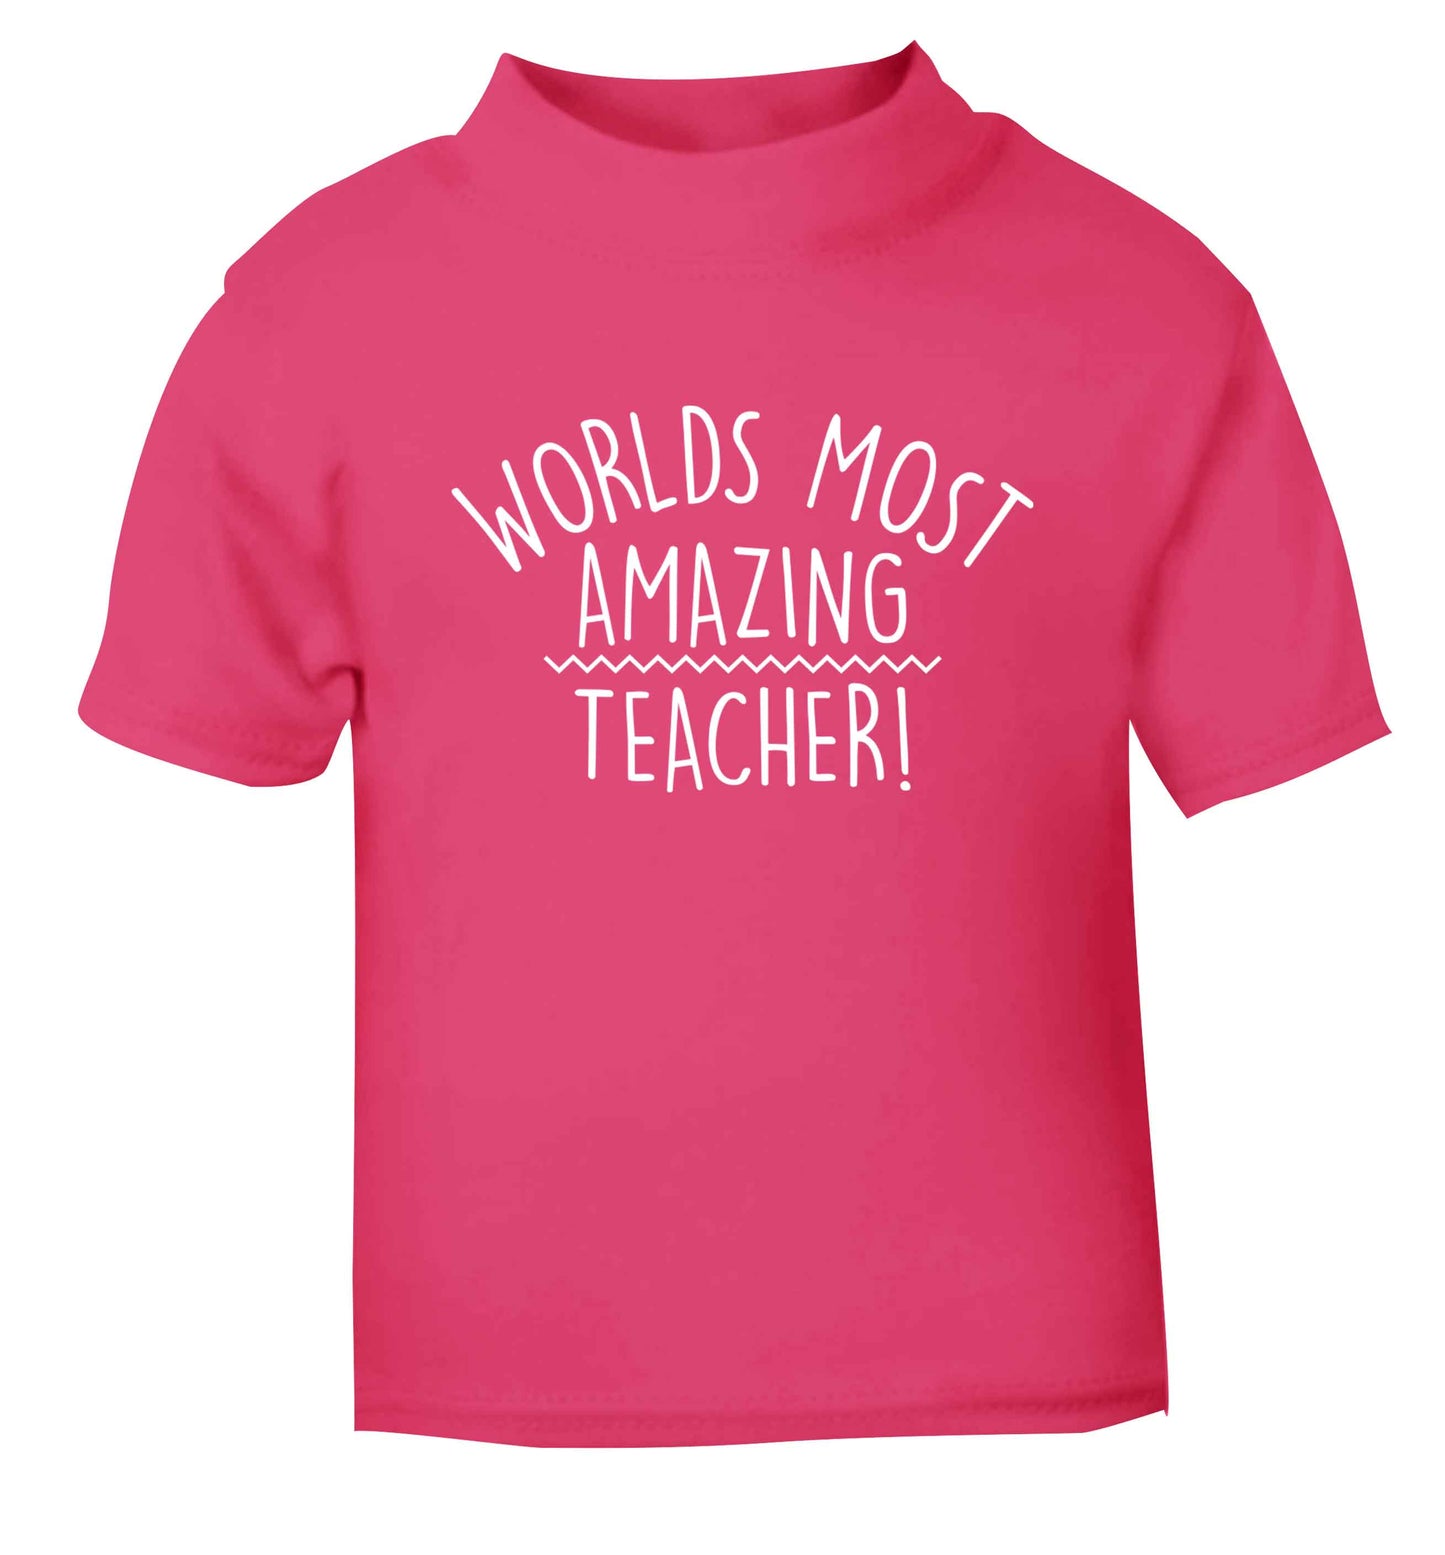 Worlds most amazing teacher pink baby toddler Tshirt 2 Years